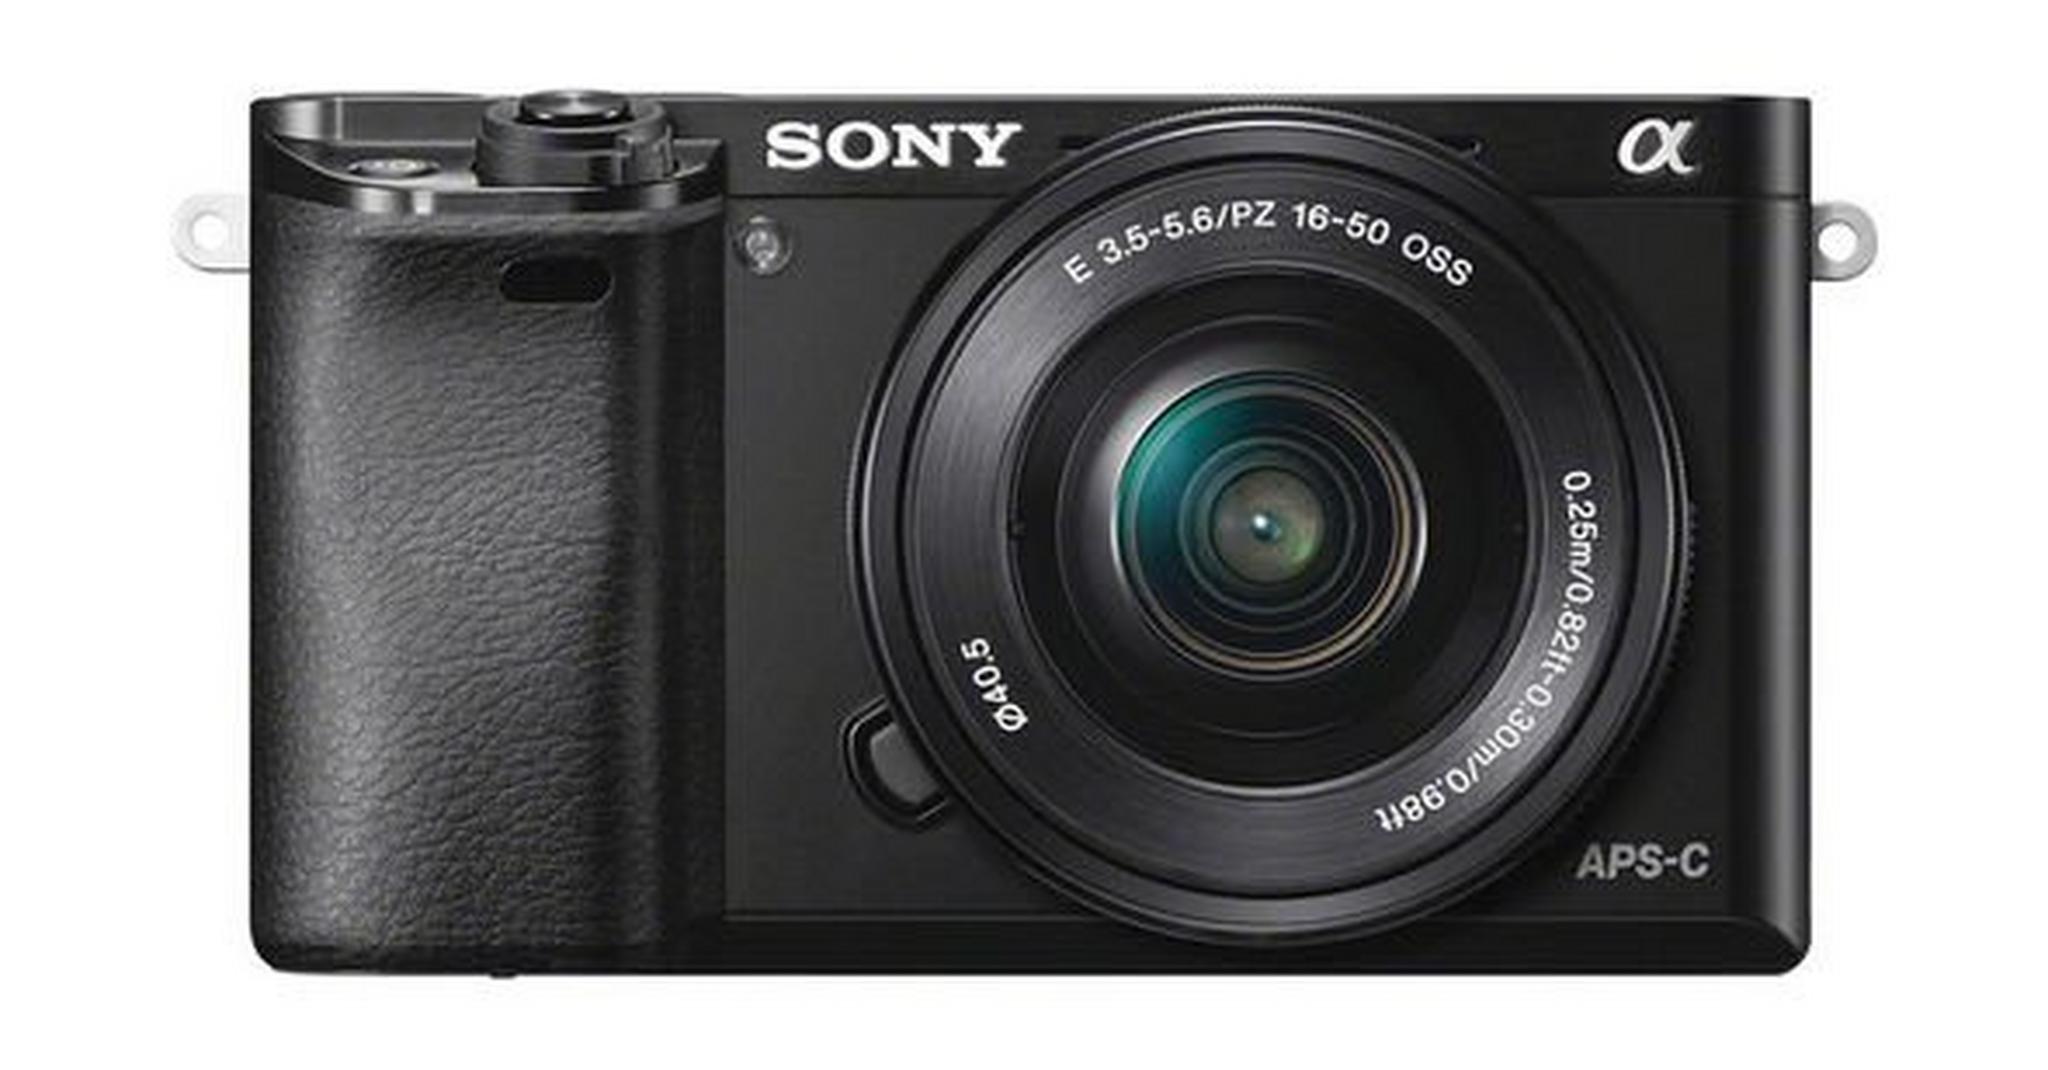 Sony Alpha a6000 Mirrorless Digital Camera with 16-50mm Lens - Black